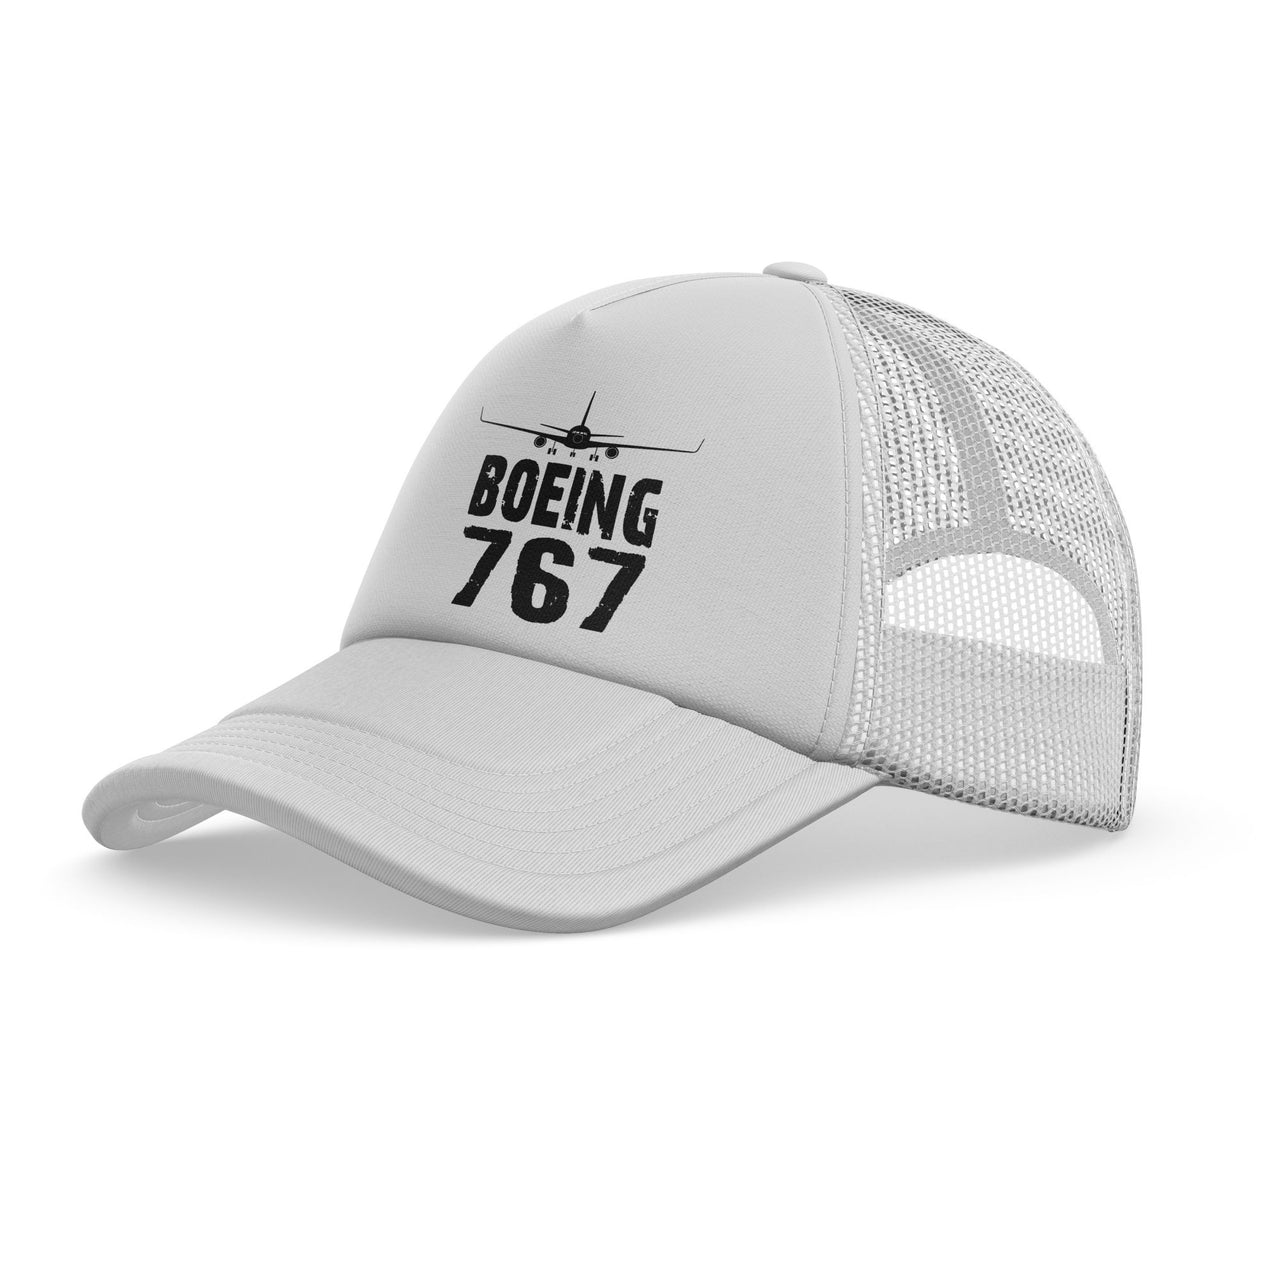 Boeing 767 & Plane Designed Trucker Caps & Hats